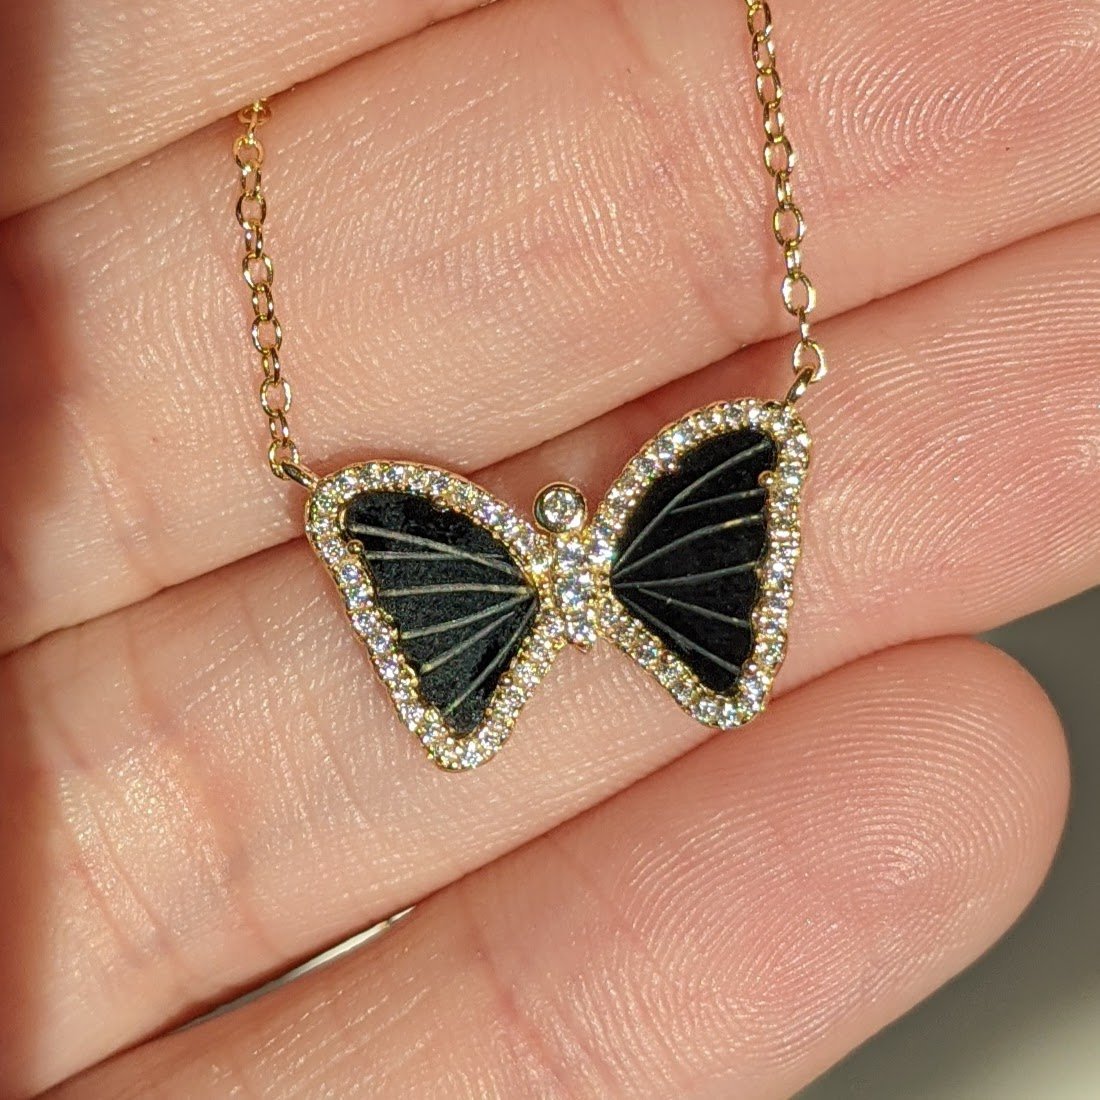 Mini Butterfly Necklace in Black Onyx